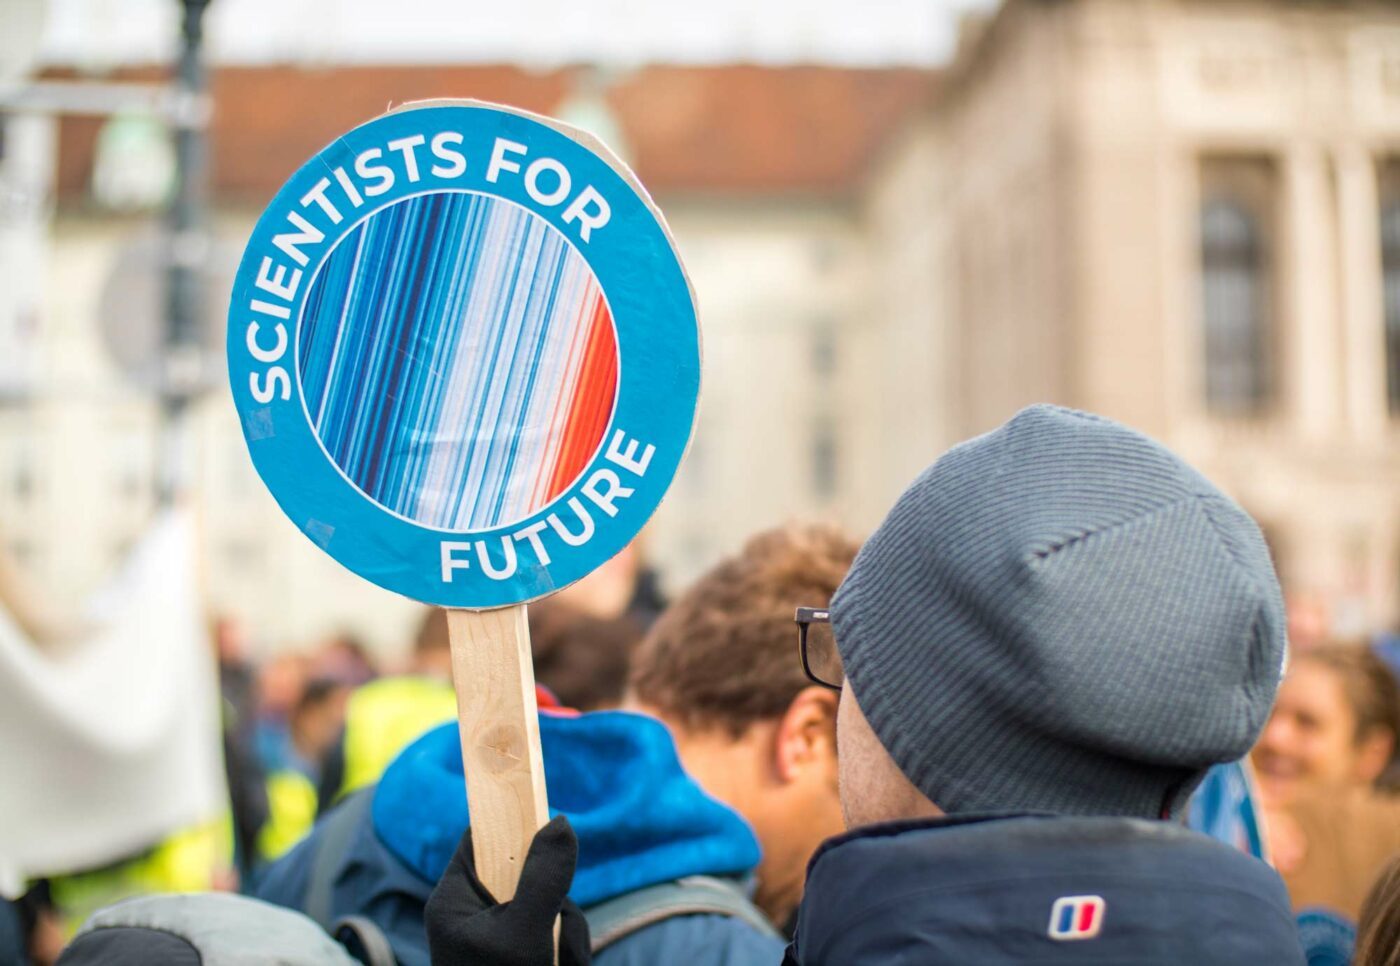 Tintner-Olifiers engagiert sich für die Initiative "Scientists for Future". Foto: wikimedia/Ivan Radic/cc by sa 2.0